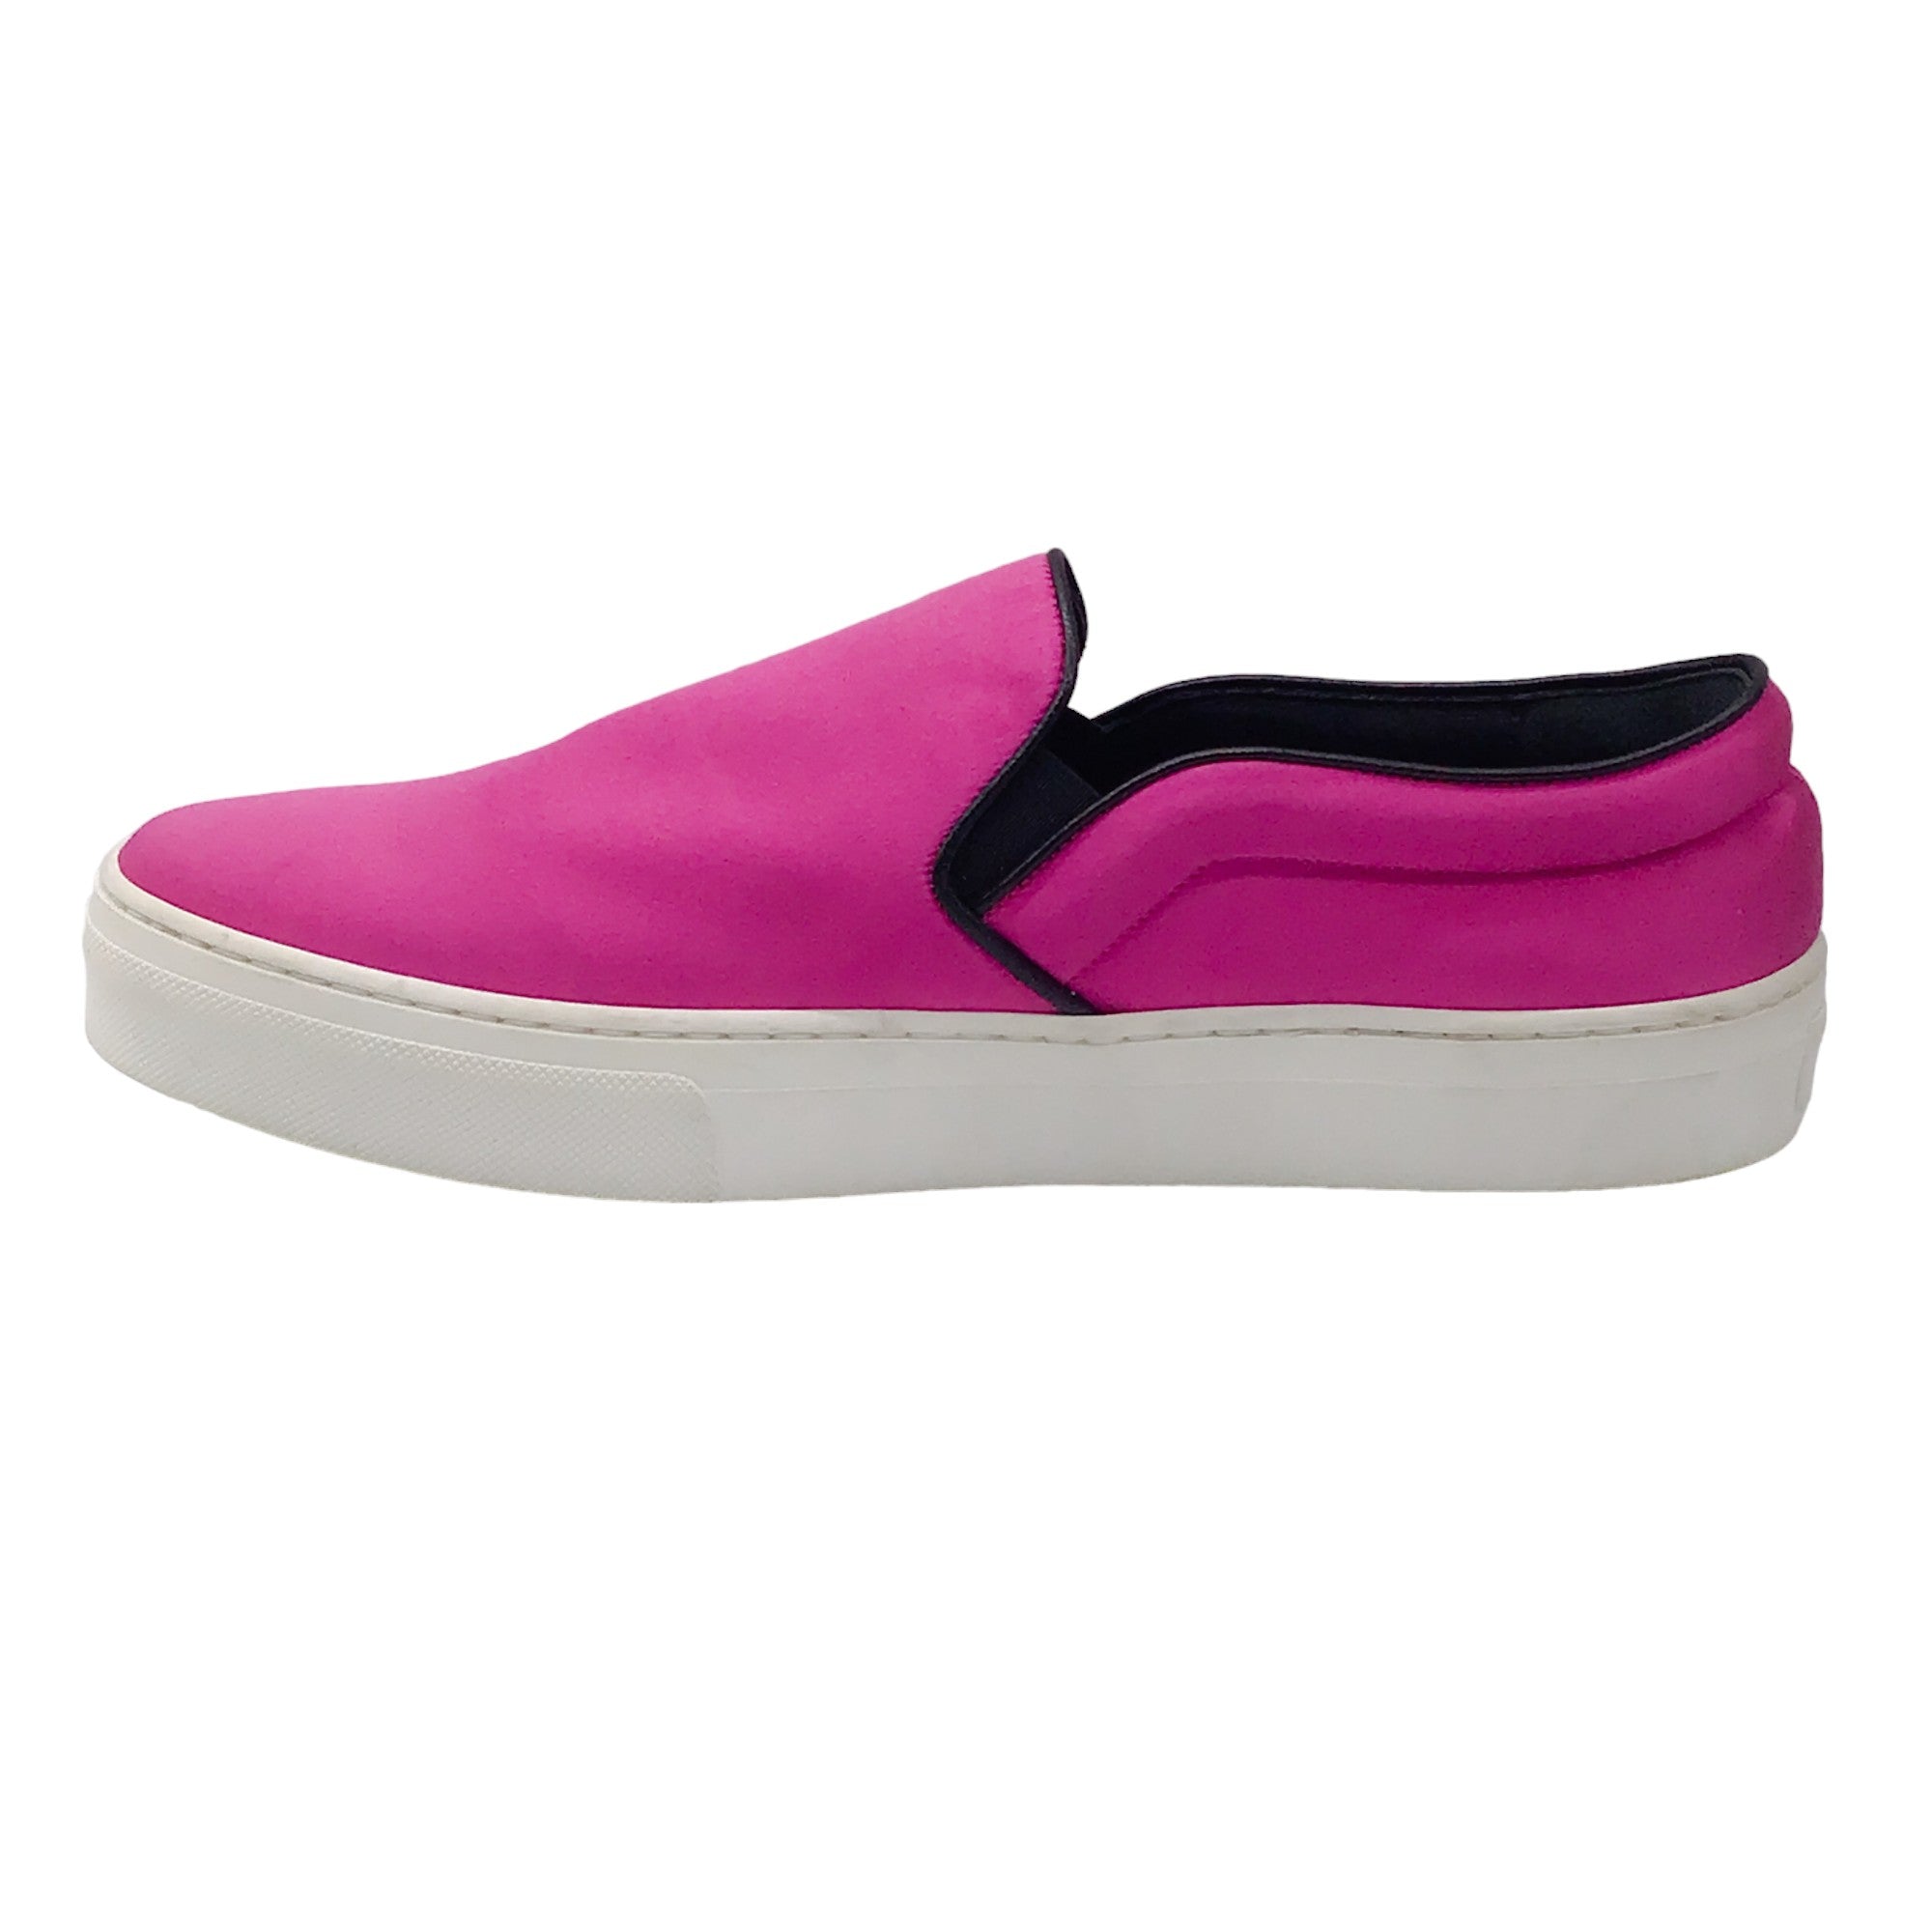 Celine Hot Pink Satin Slip-On Sneakers